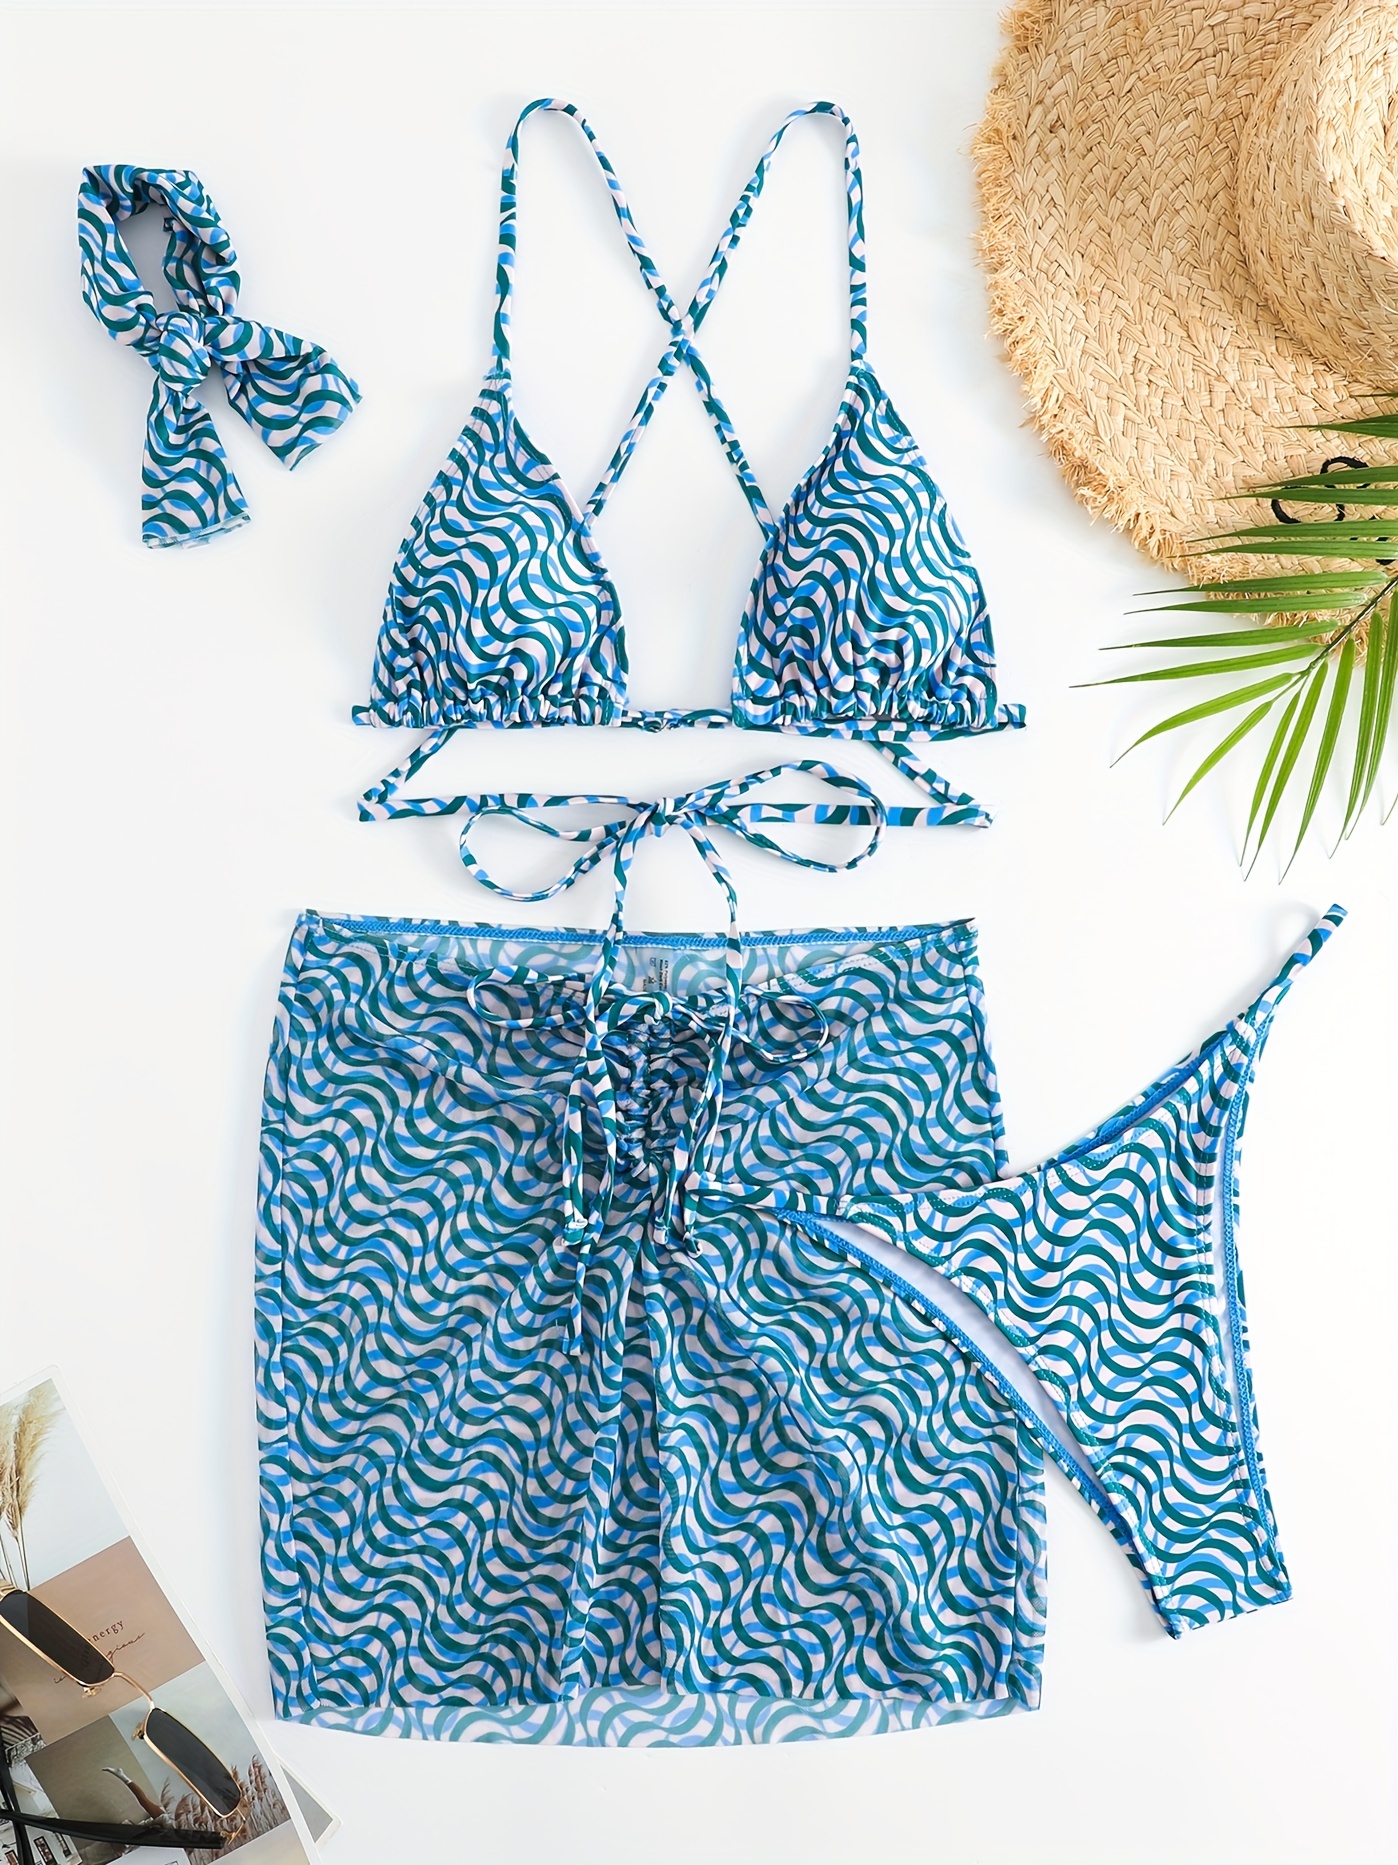 SHEIN VCAY Chain Bikini Swimsuit & Tropical Print Sarong Set